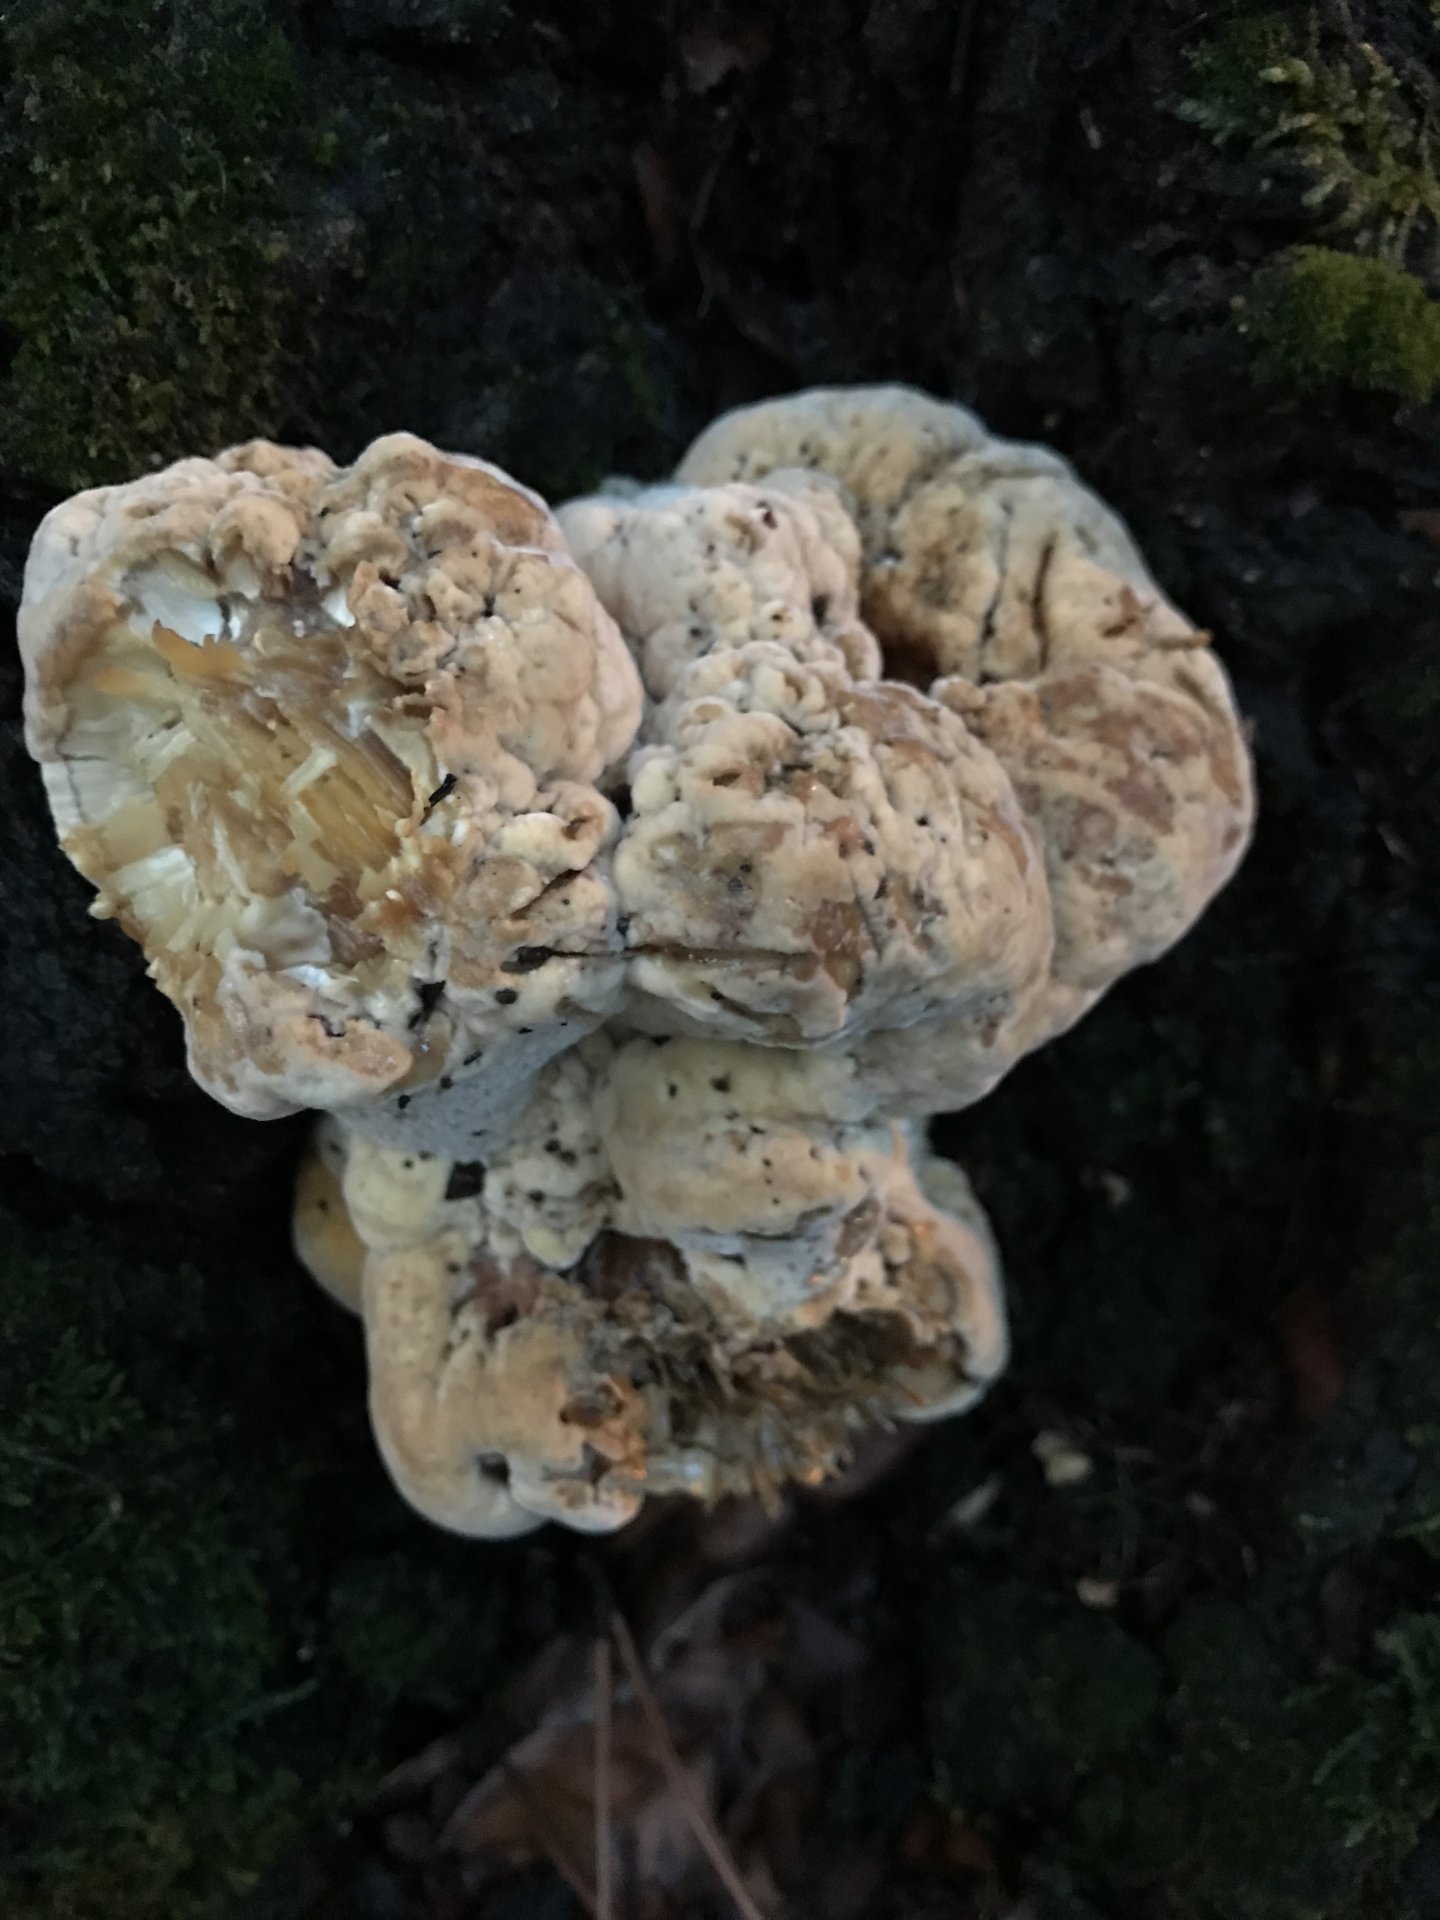 Cool fungus on base of oak tree